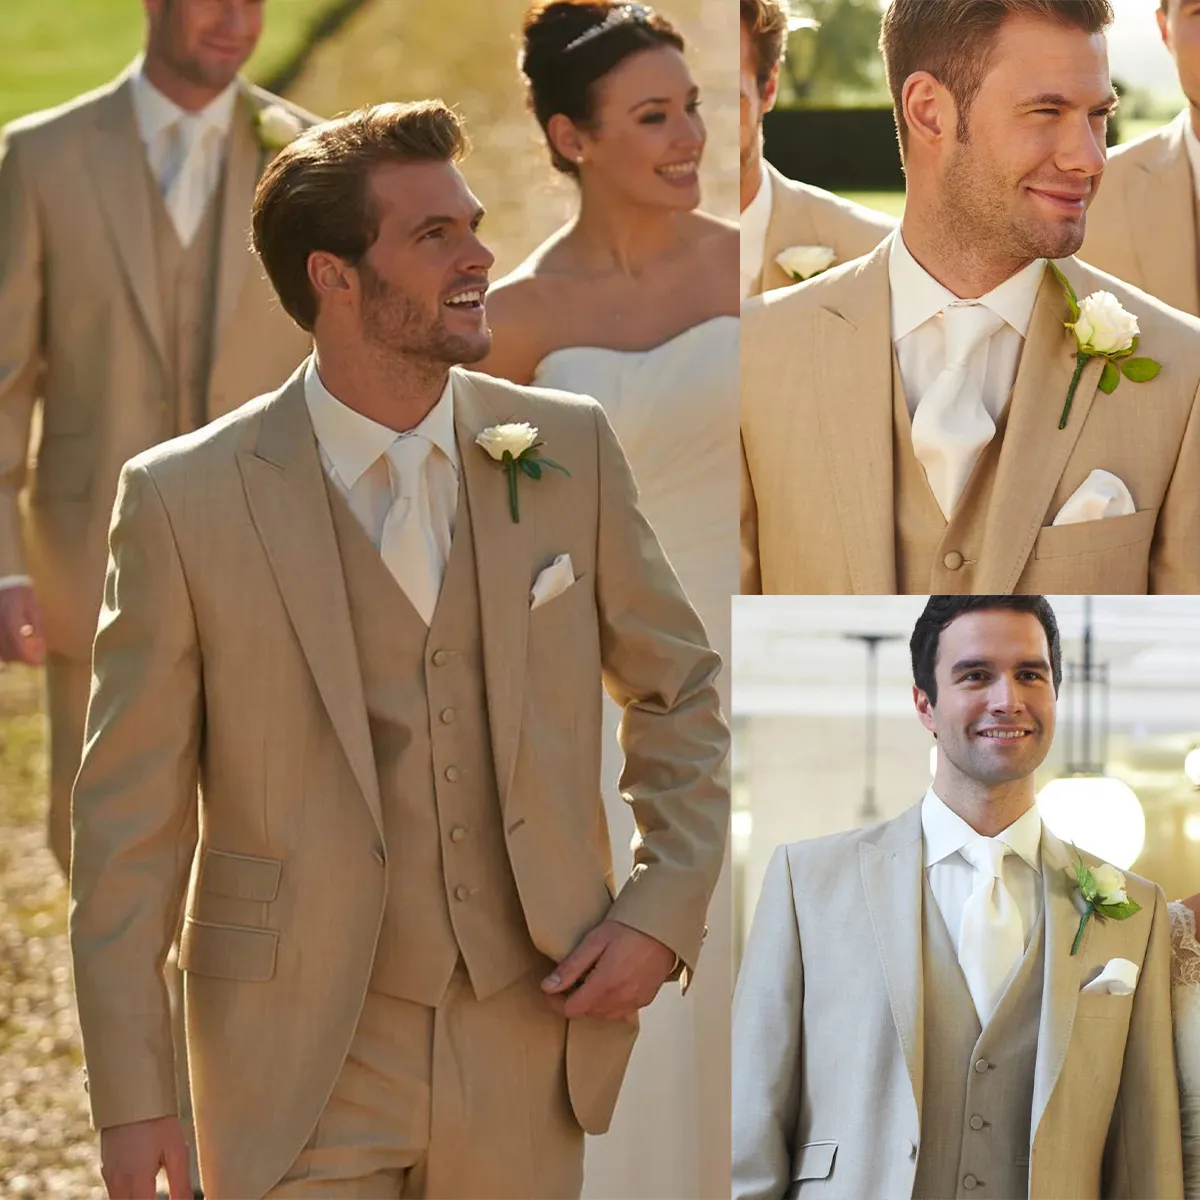 Khaki Wedding Suits For Men Peaked Lapel Groom Wear Tuxedos 3 Pieces (Jacket+Pants+Vest) Business Style Custom Made